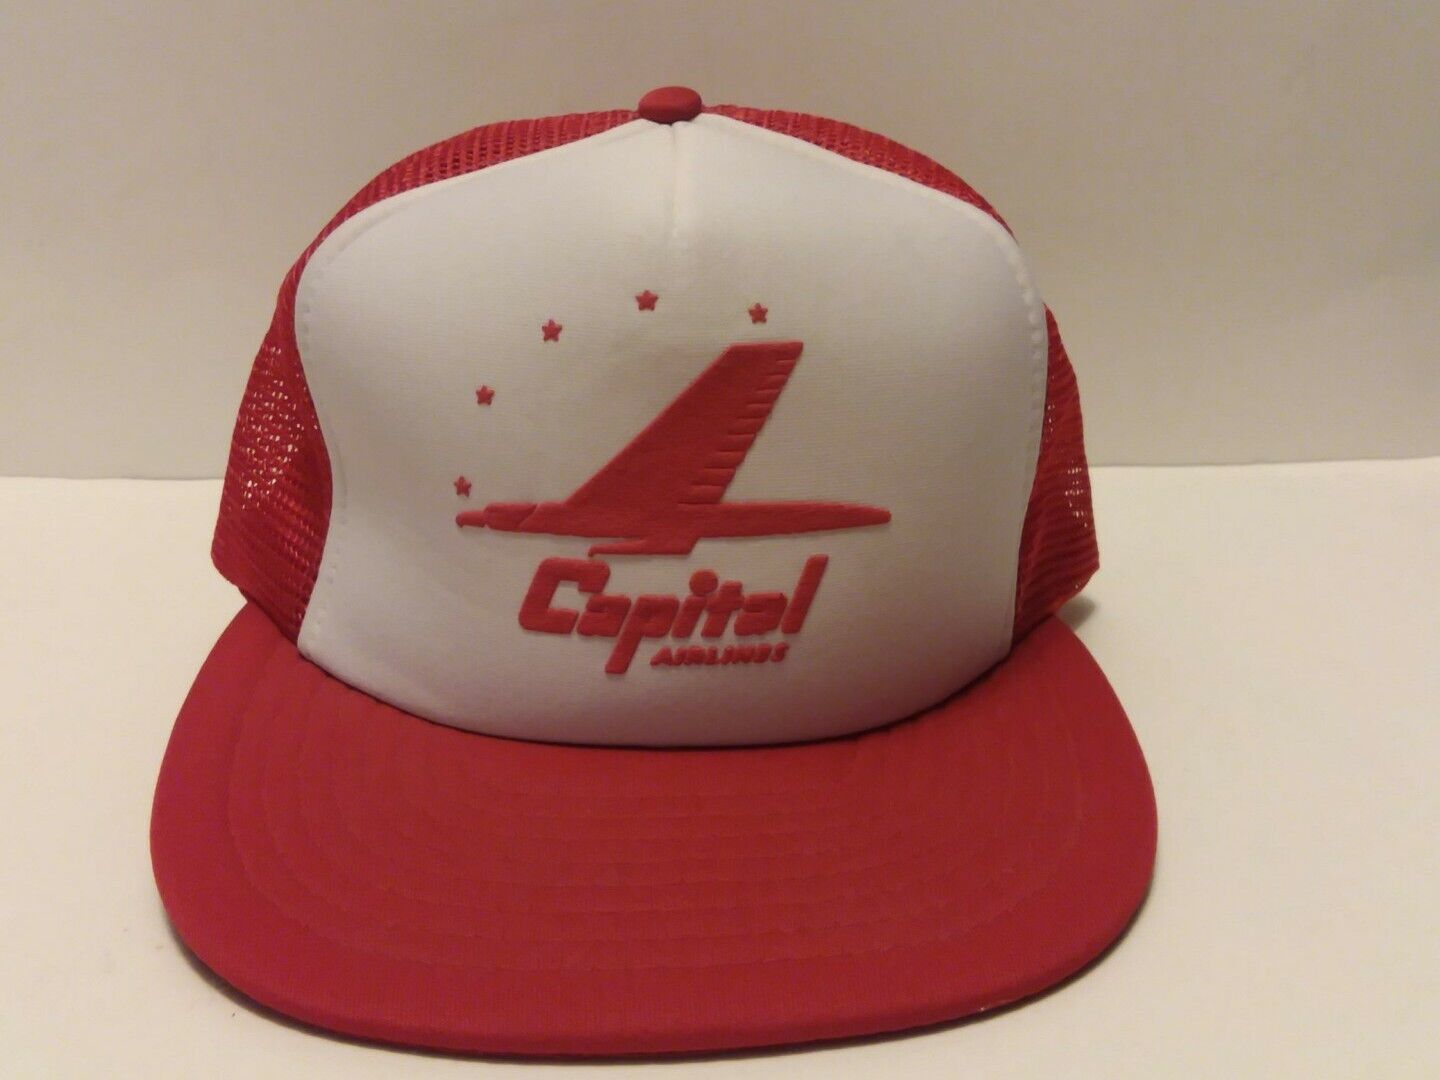 Vintage NOS Capital Airlines Snapback Trucker Hat Red White adjustable